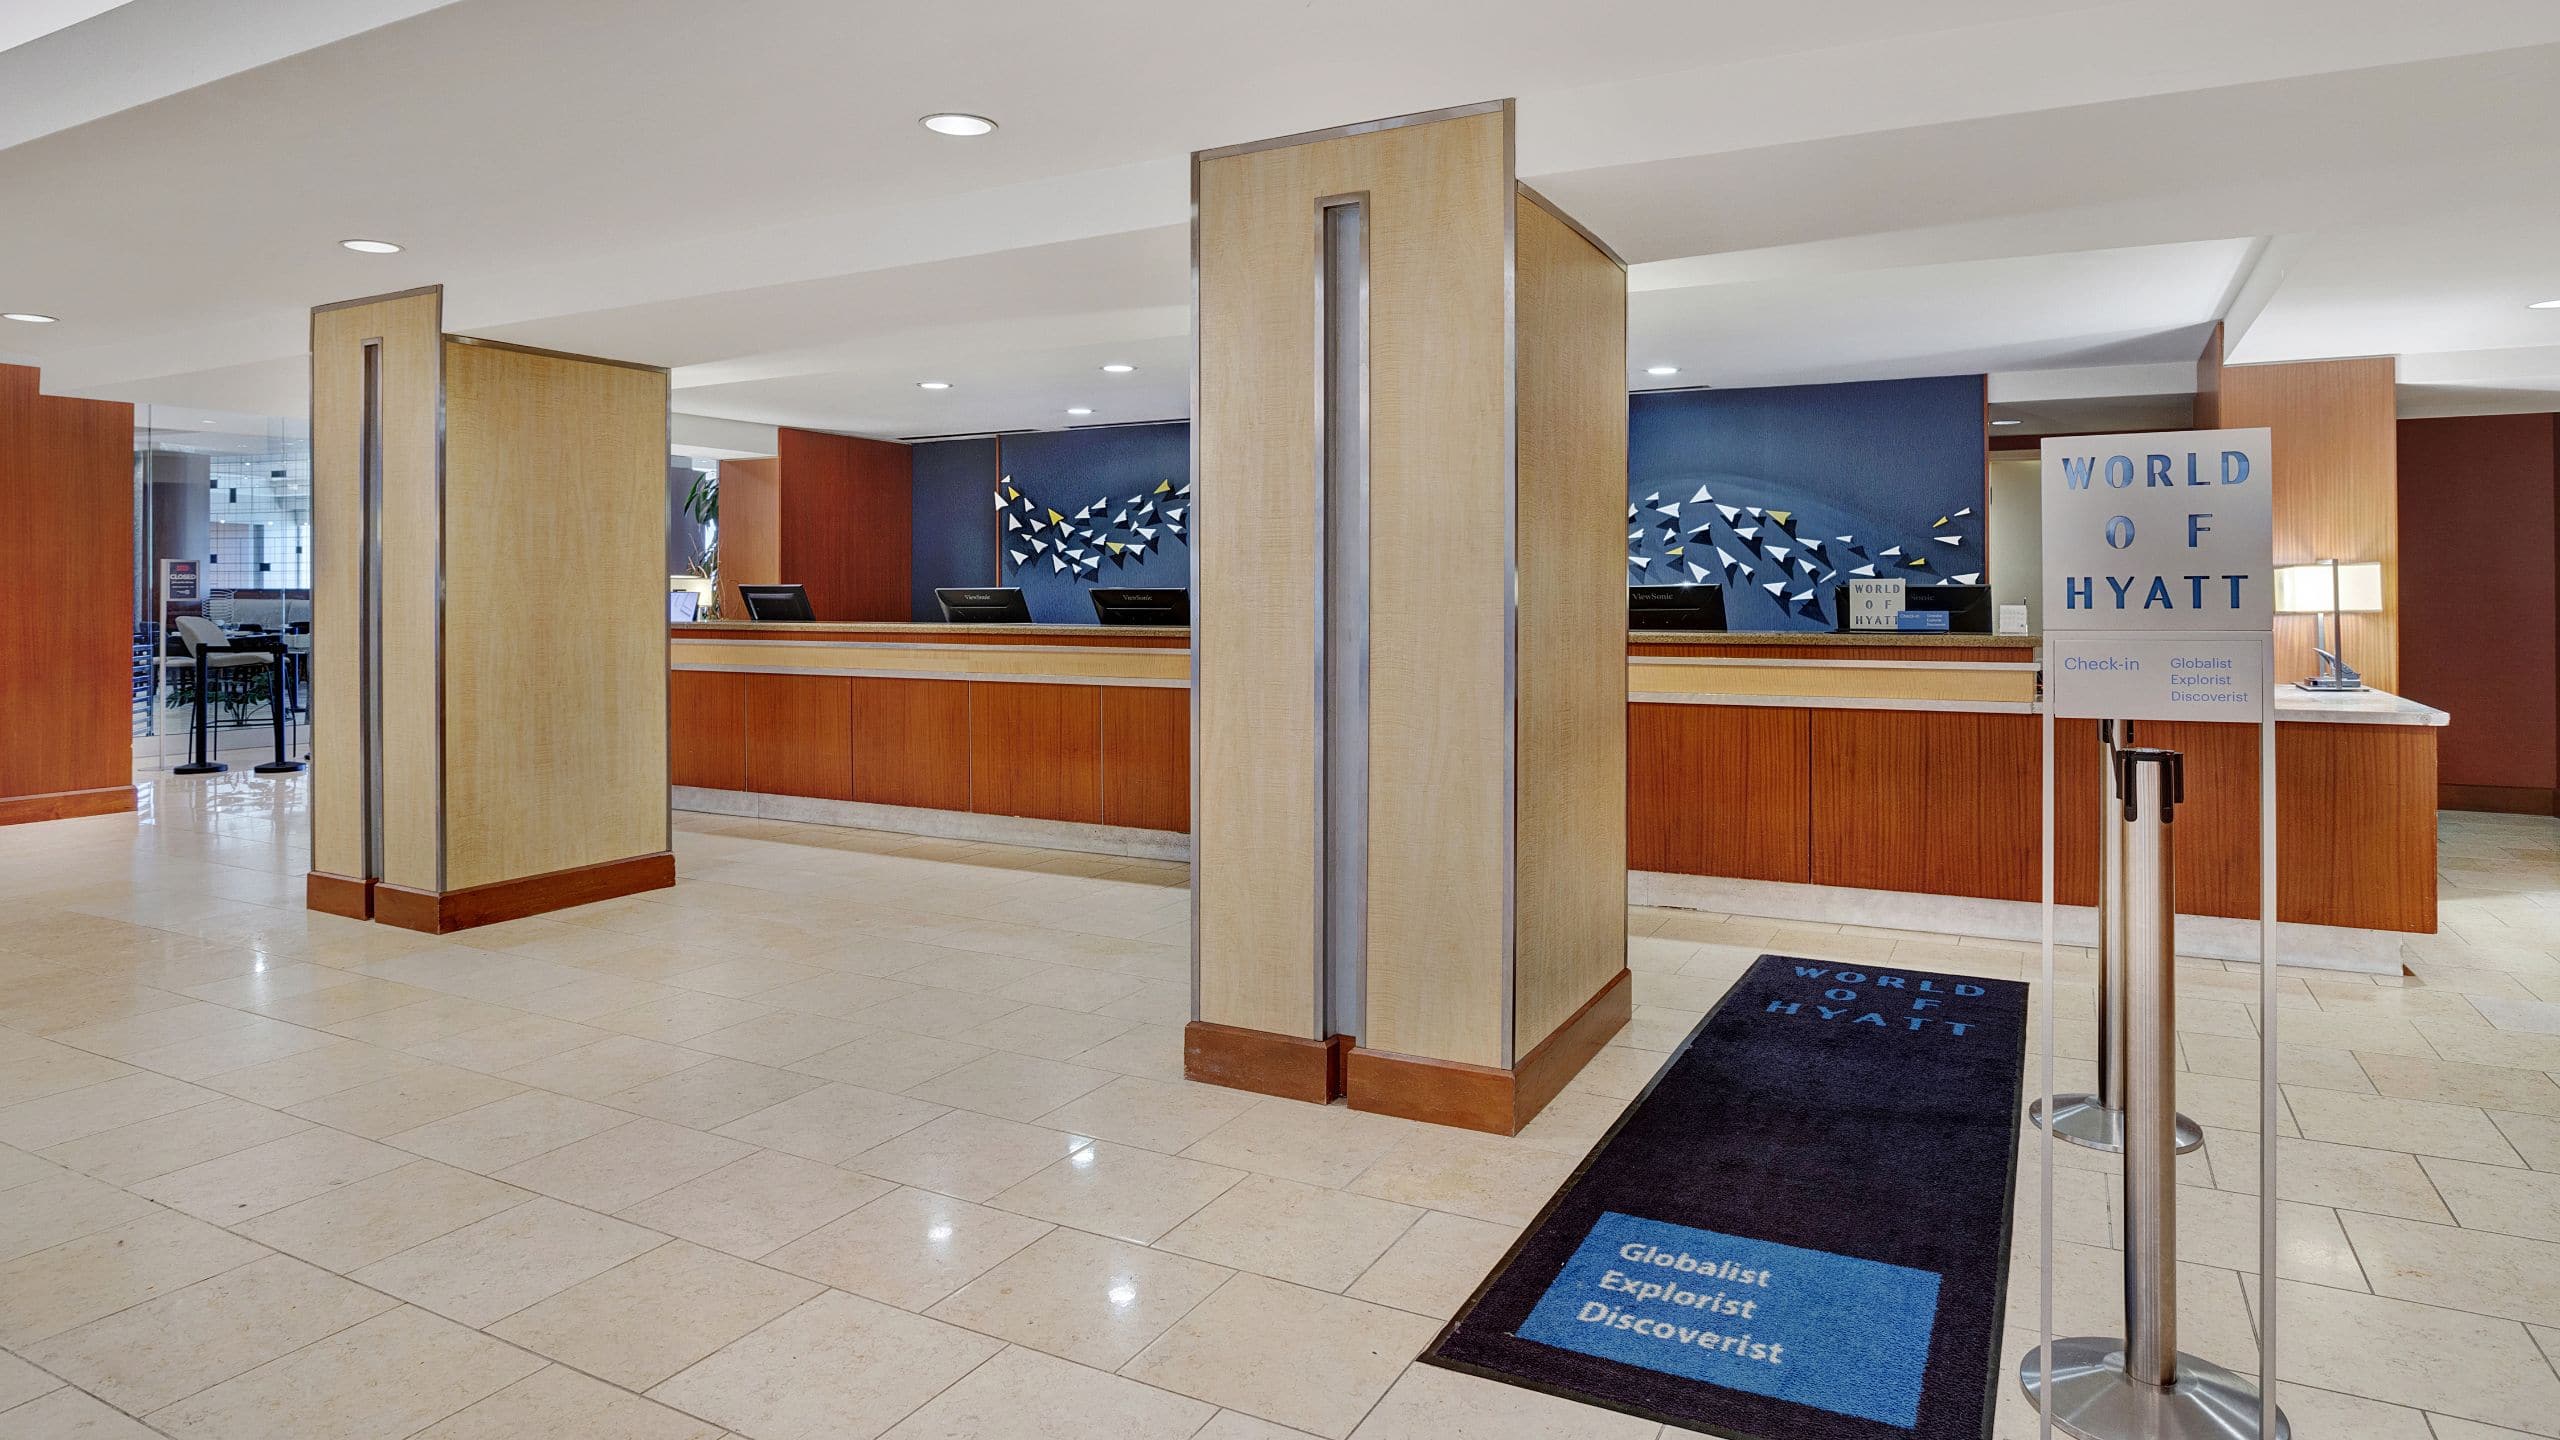 Hyatt Regency DFW International Airport Lobby Front Desk Check In Area